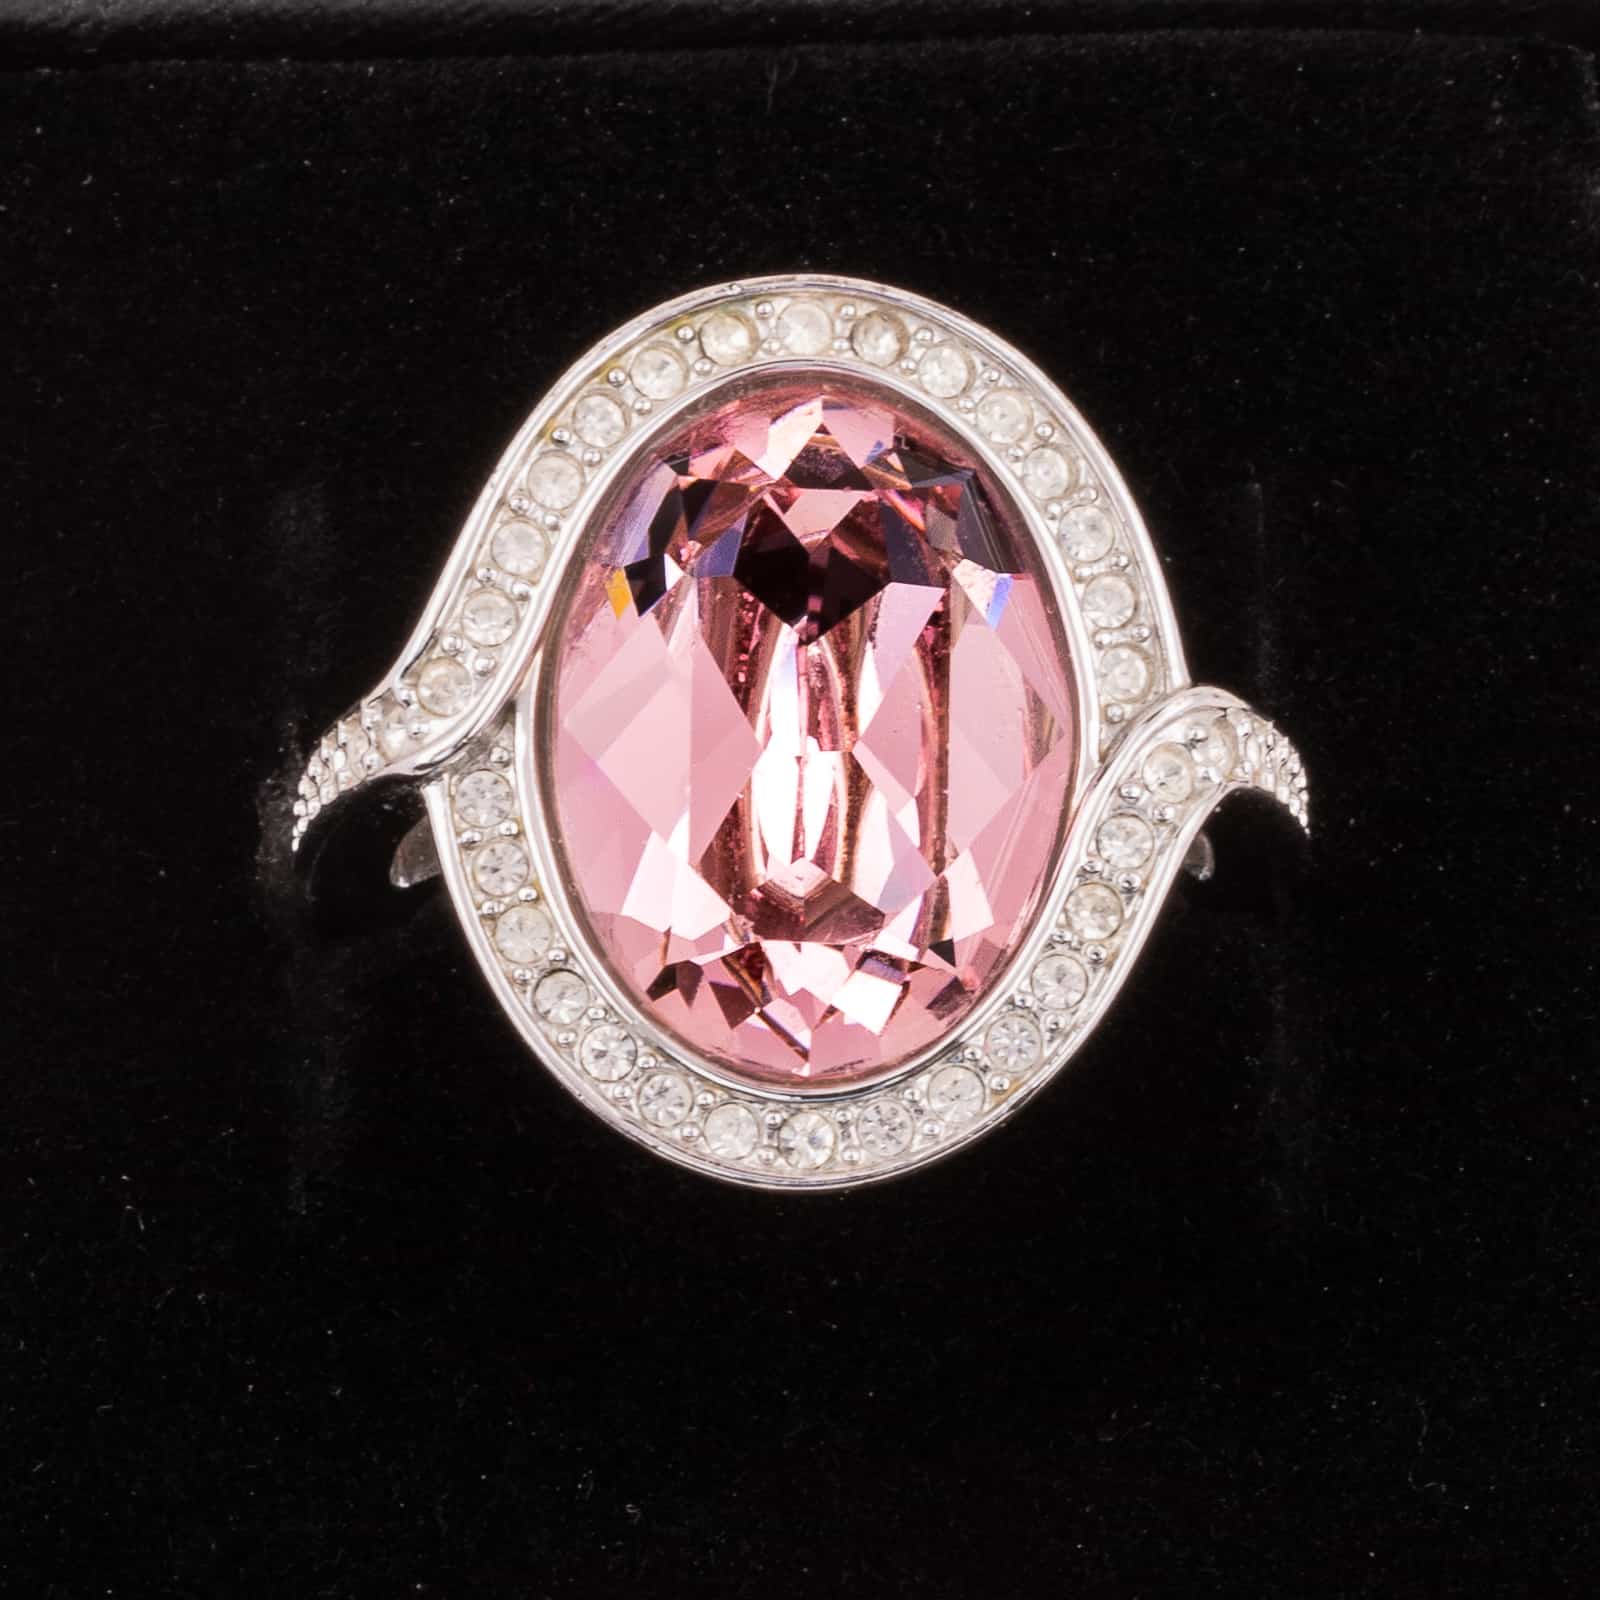 SWAROVSKI ring with pink Vintage – Beauty Find crystal